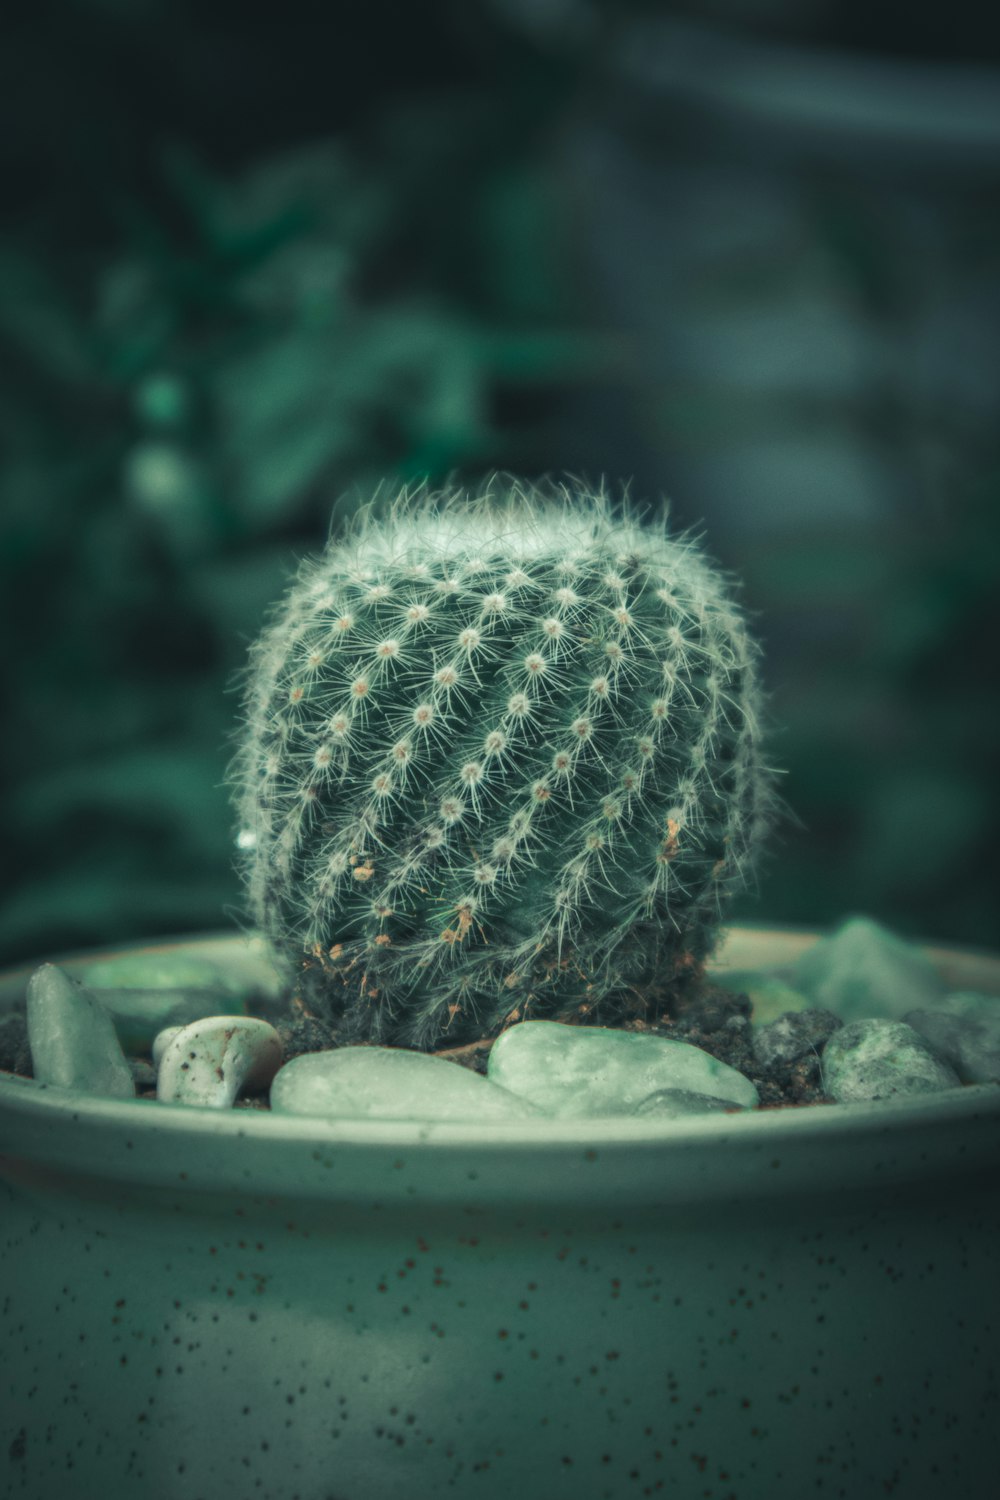 green cactus in gray pot